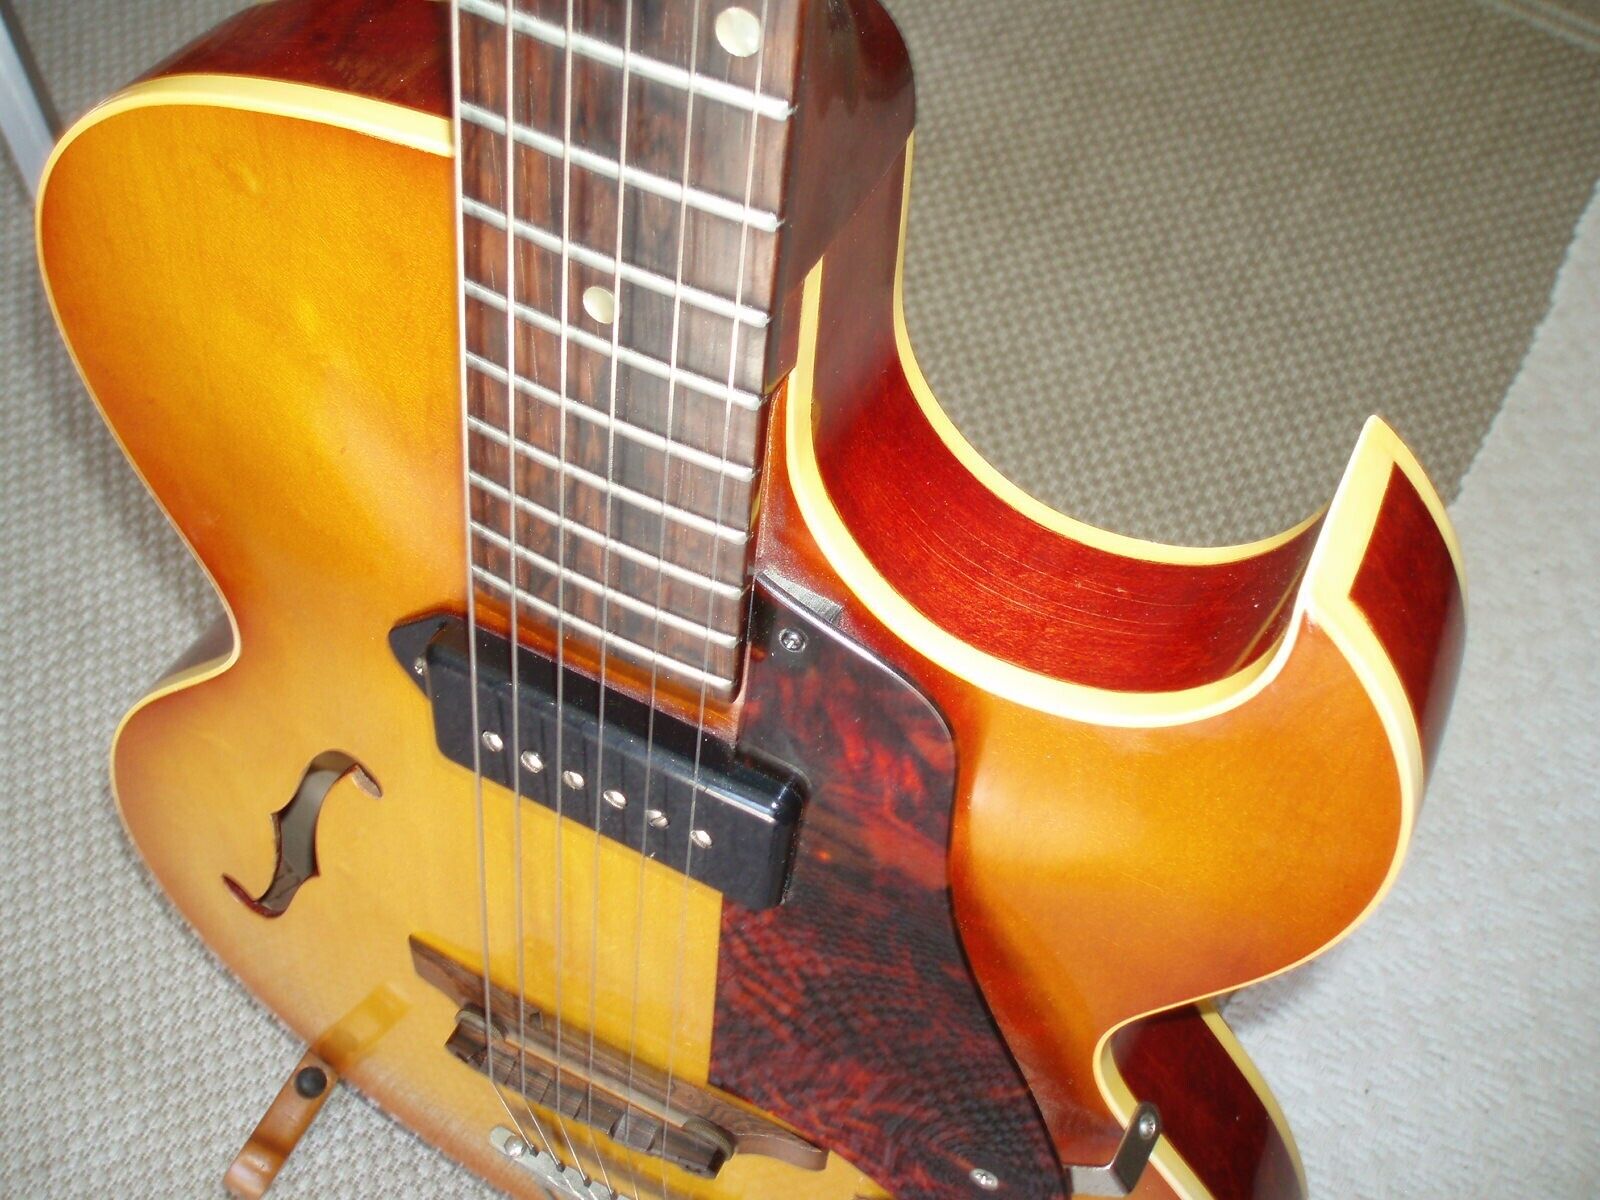 1962 Gibson ES-125  thin body single P90 pickup